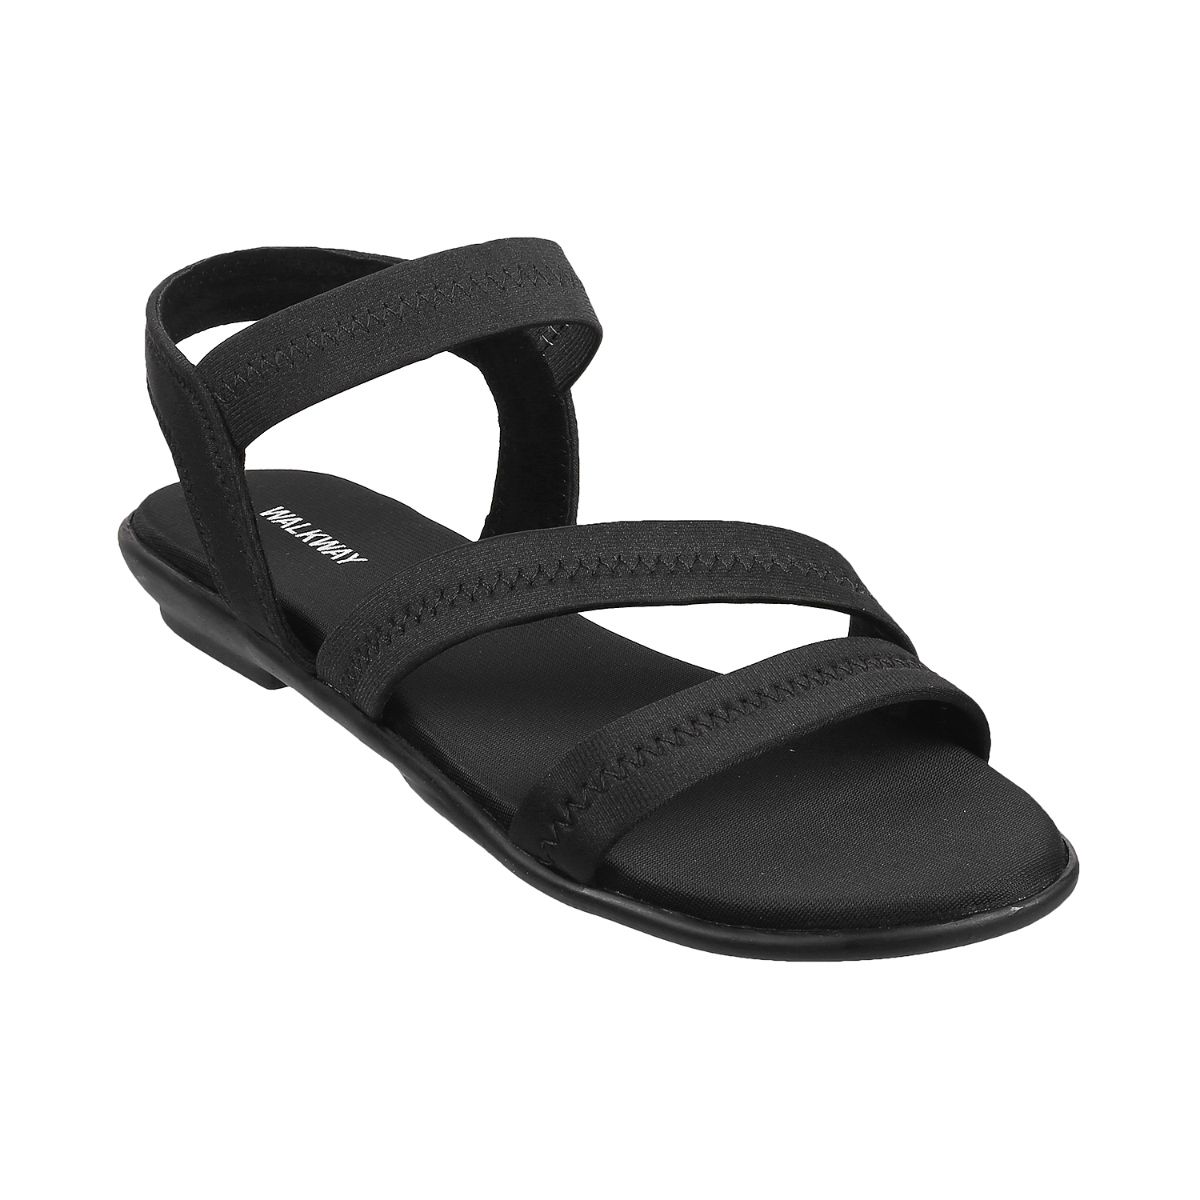 Details more than 78 black sandals online india super hot